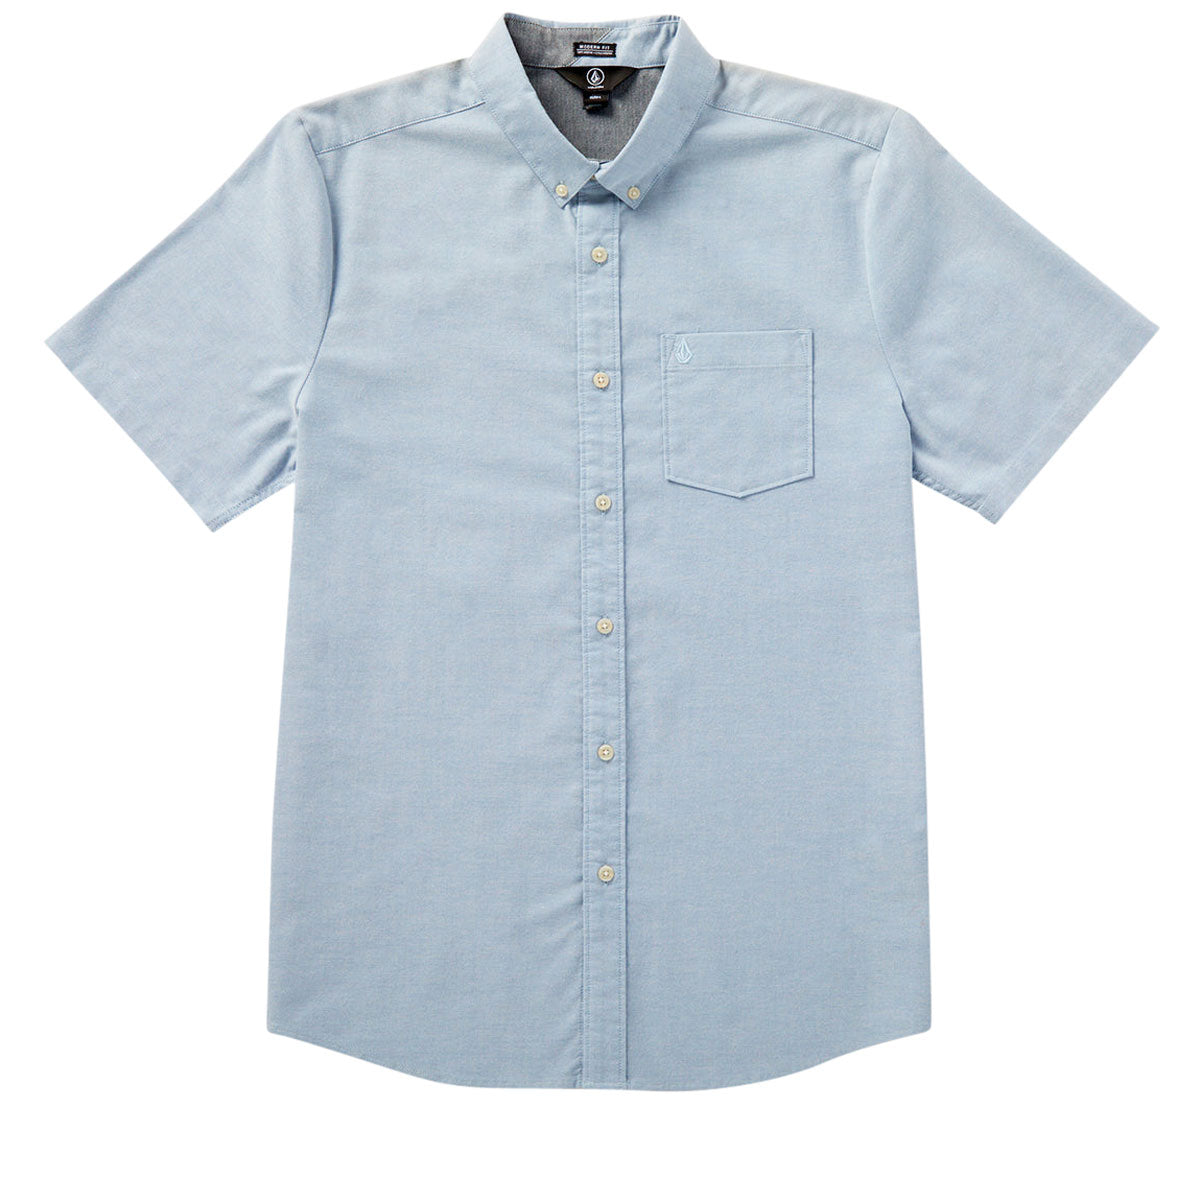 Volcom Everett Oxford Short Sleeve Shirt - Wrecked Indigo image 1